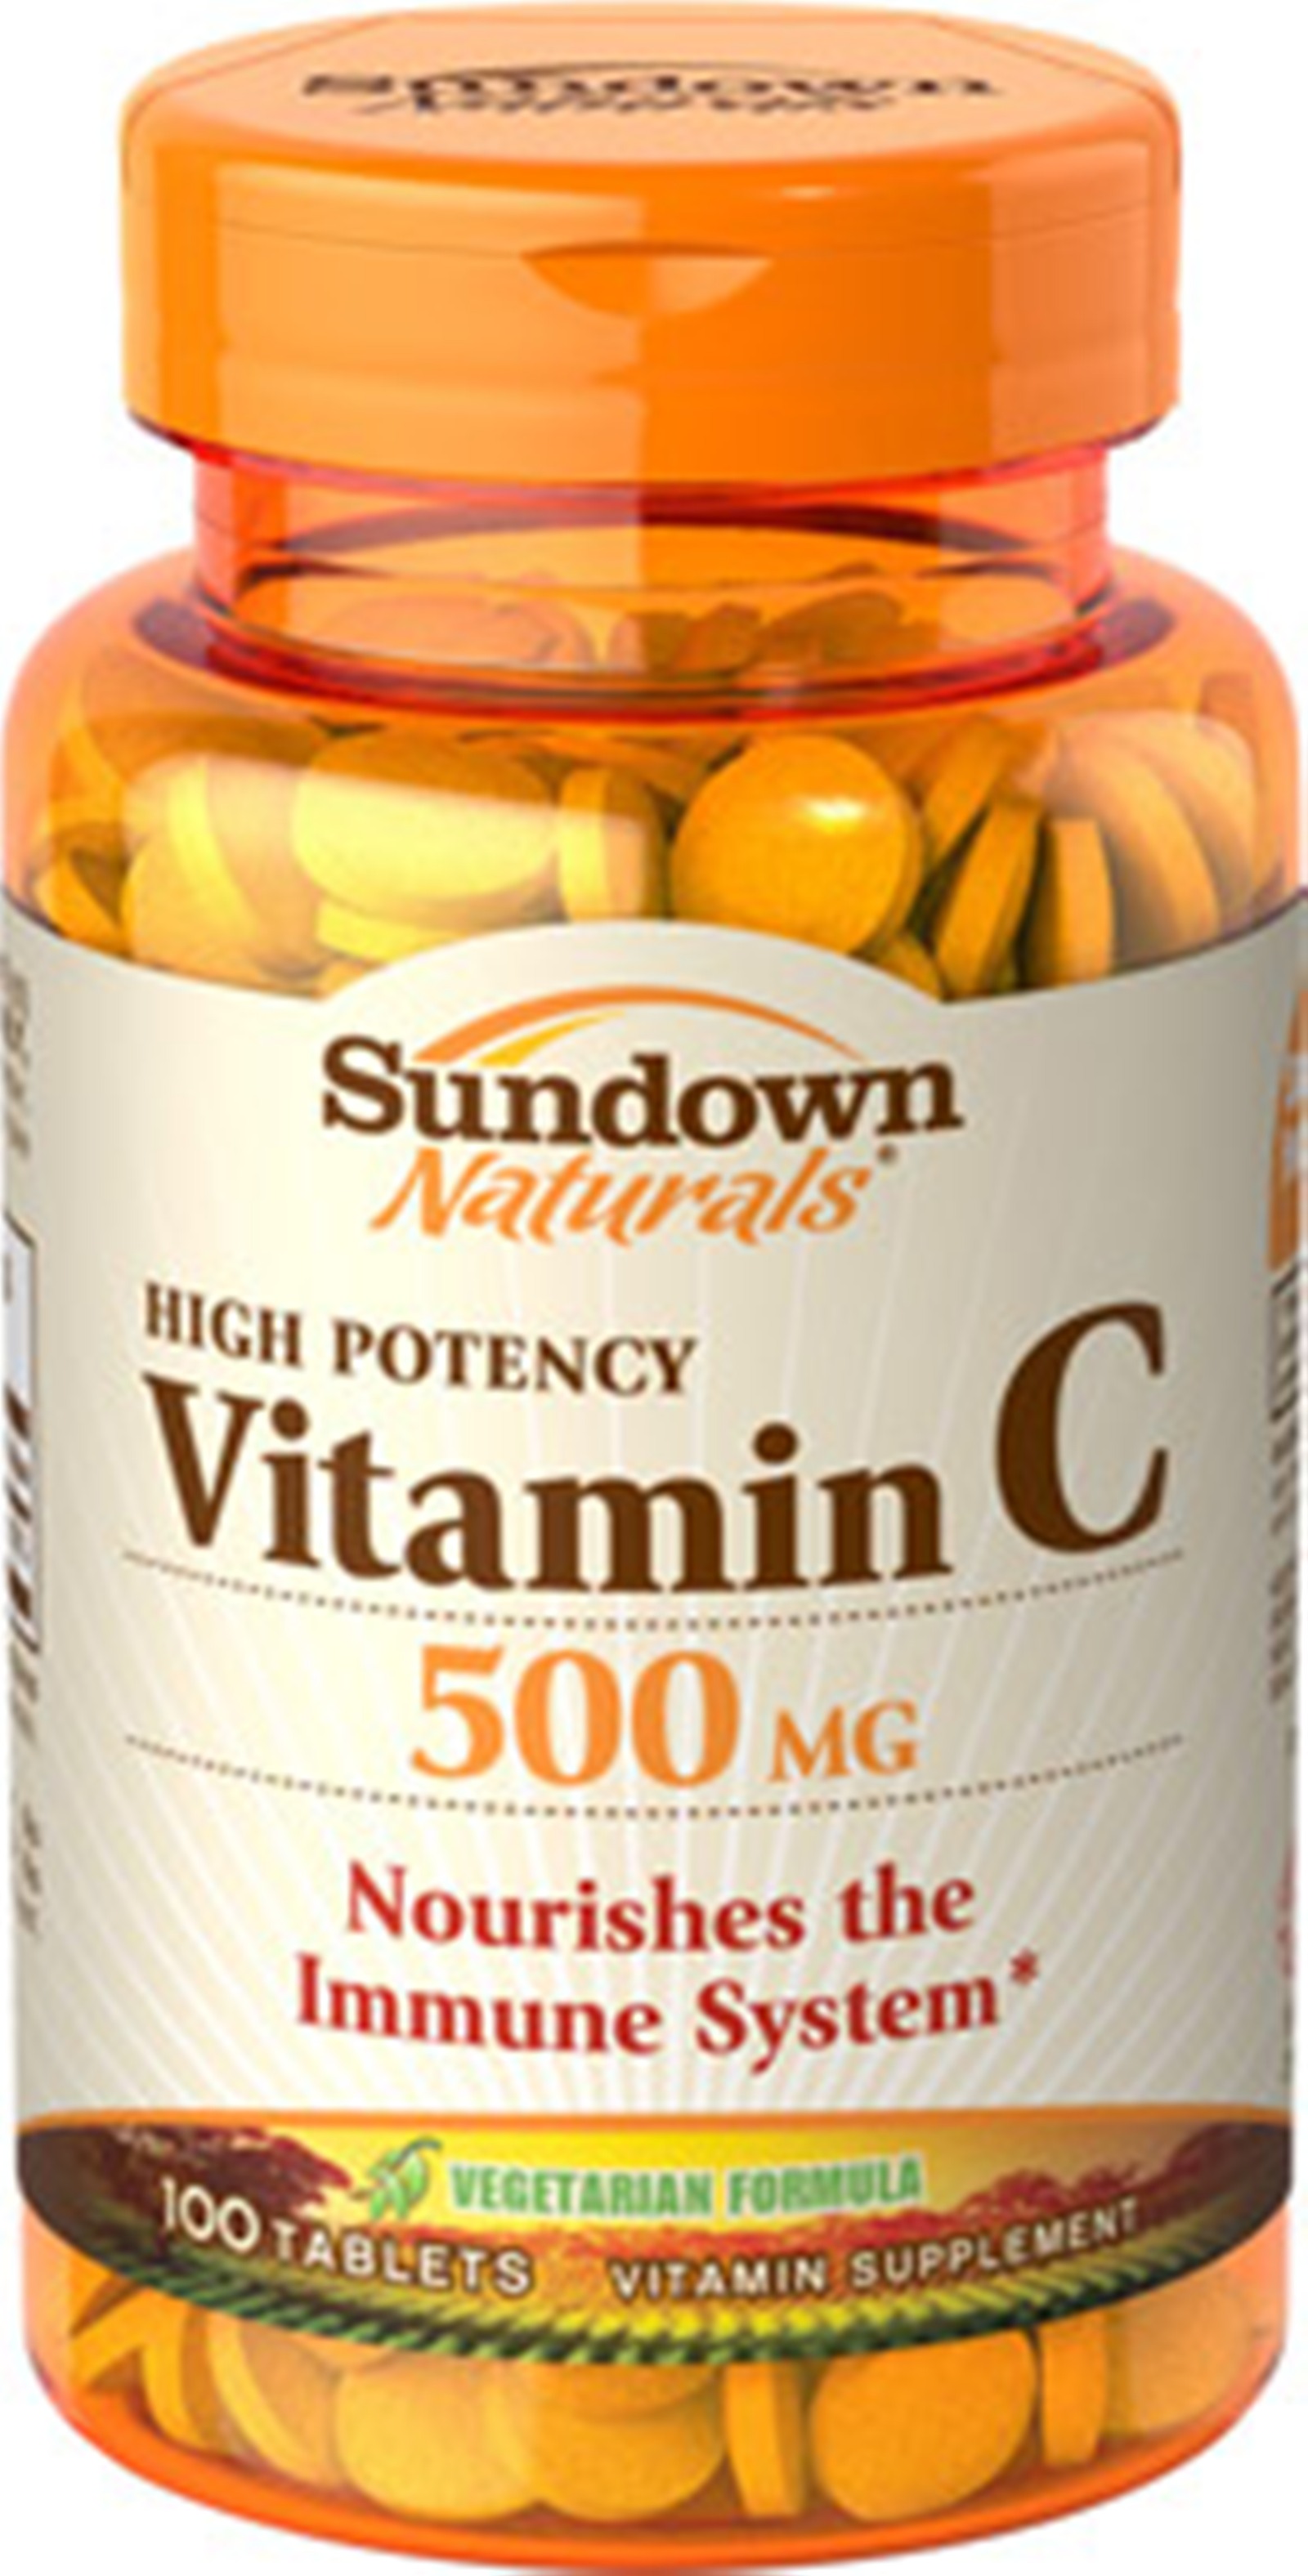 Sundown Naturals Vitamin C With Ascorbic Acid, 100 Tablets, 500 mg